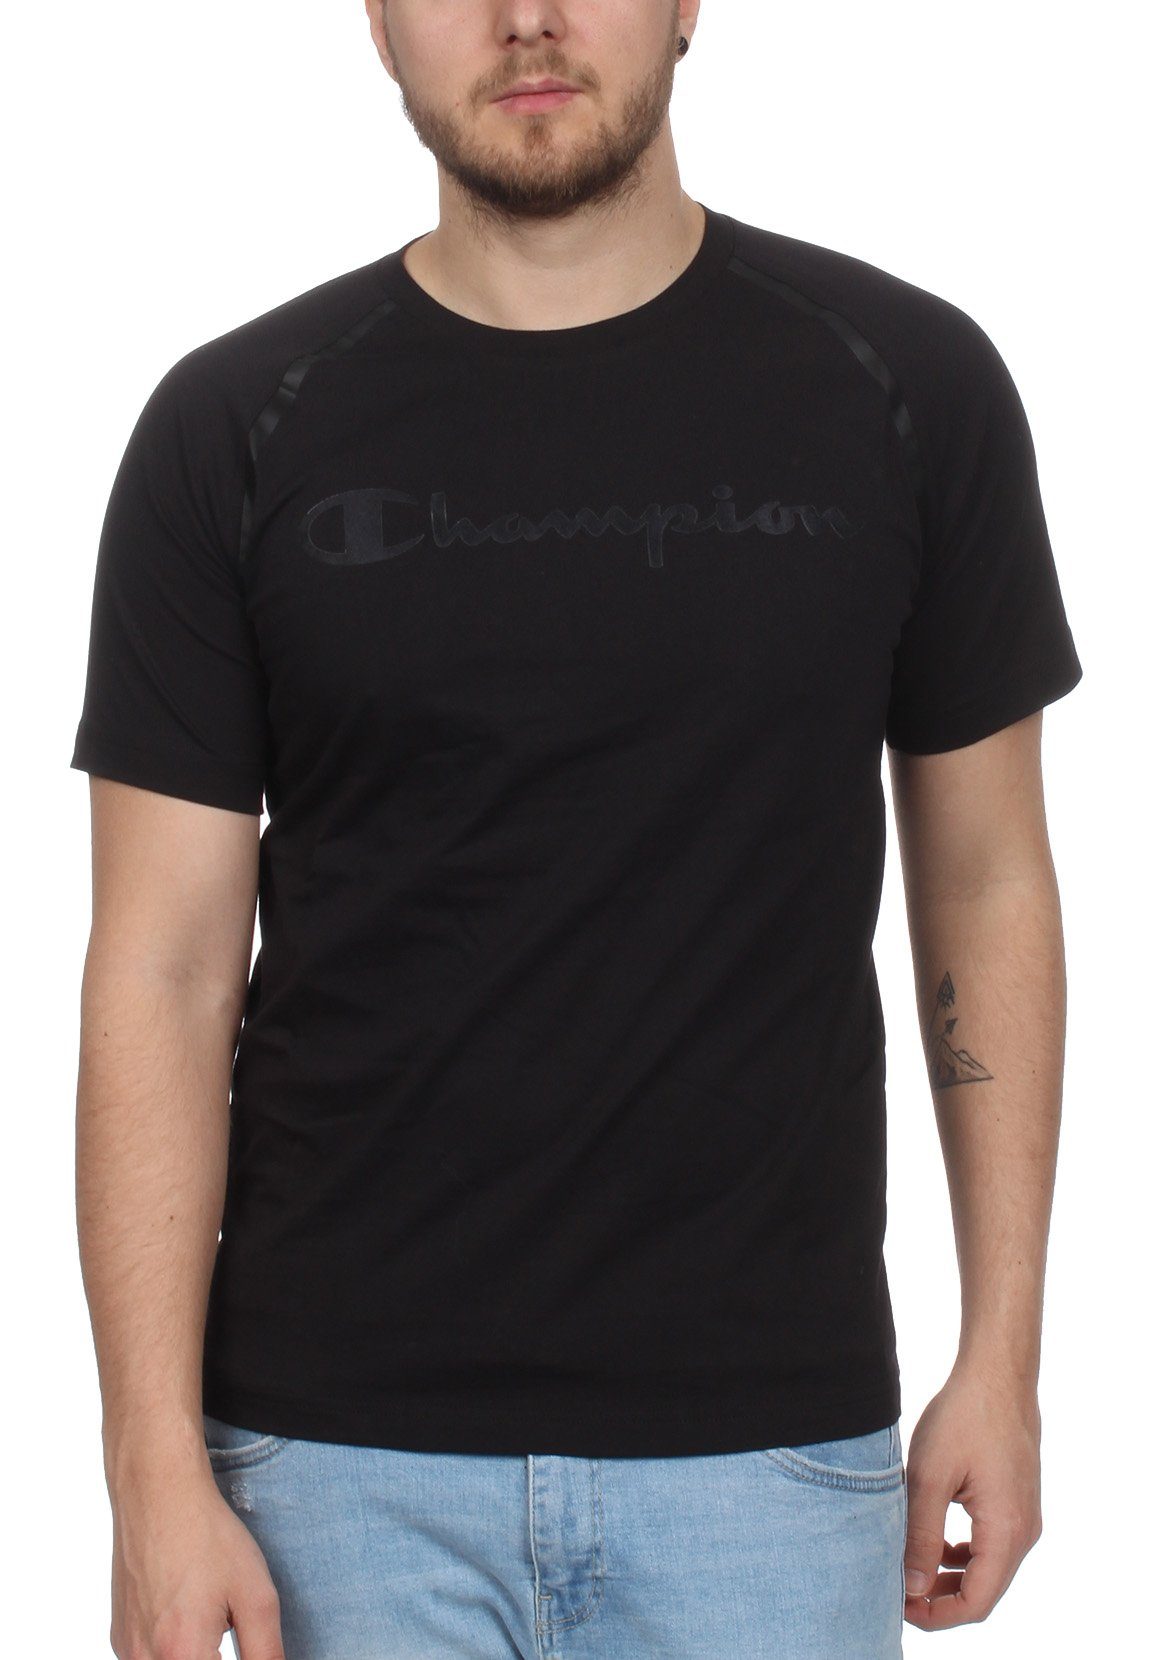 Champion NBK T-Shirt Schwarz S19 T-Shirt 213197 KK001 Herren Champion